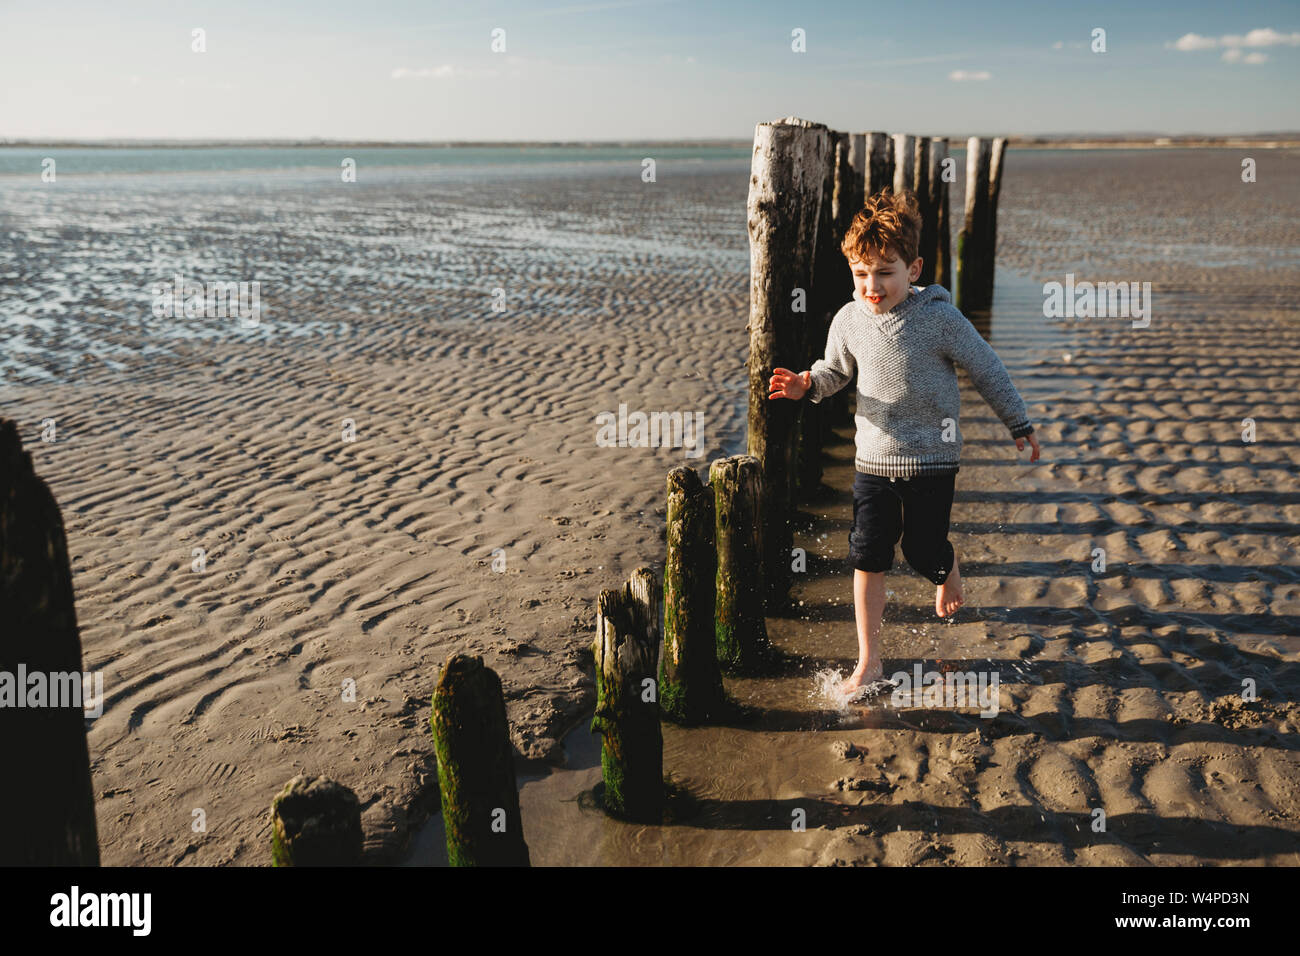 Boy running through water at beach against decaying breakwater pilings Stock Photo